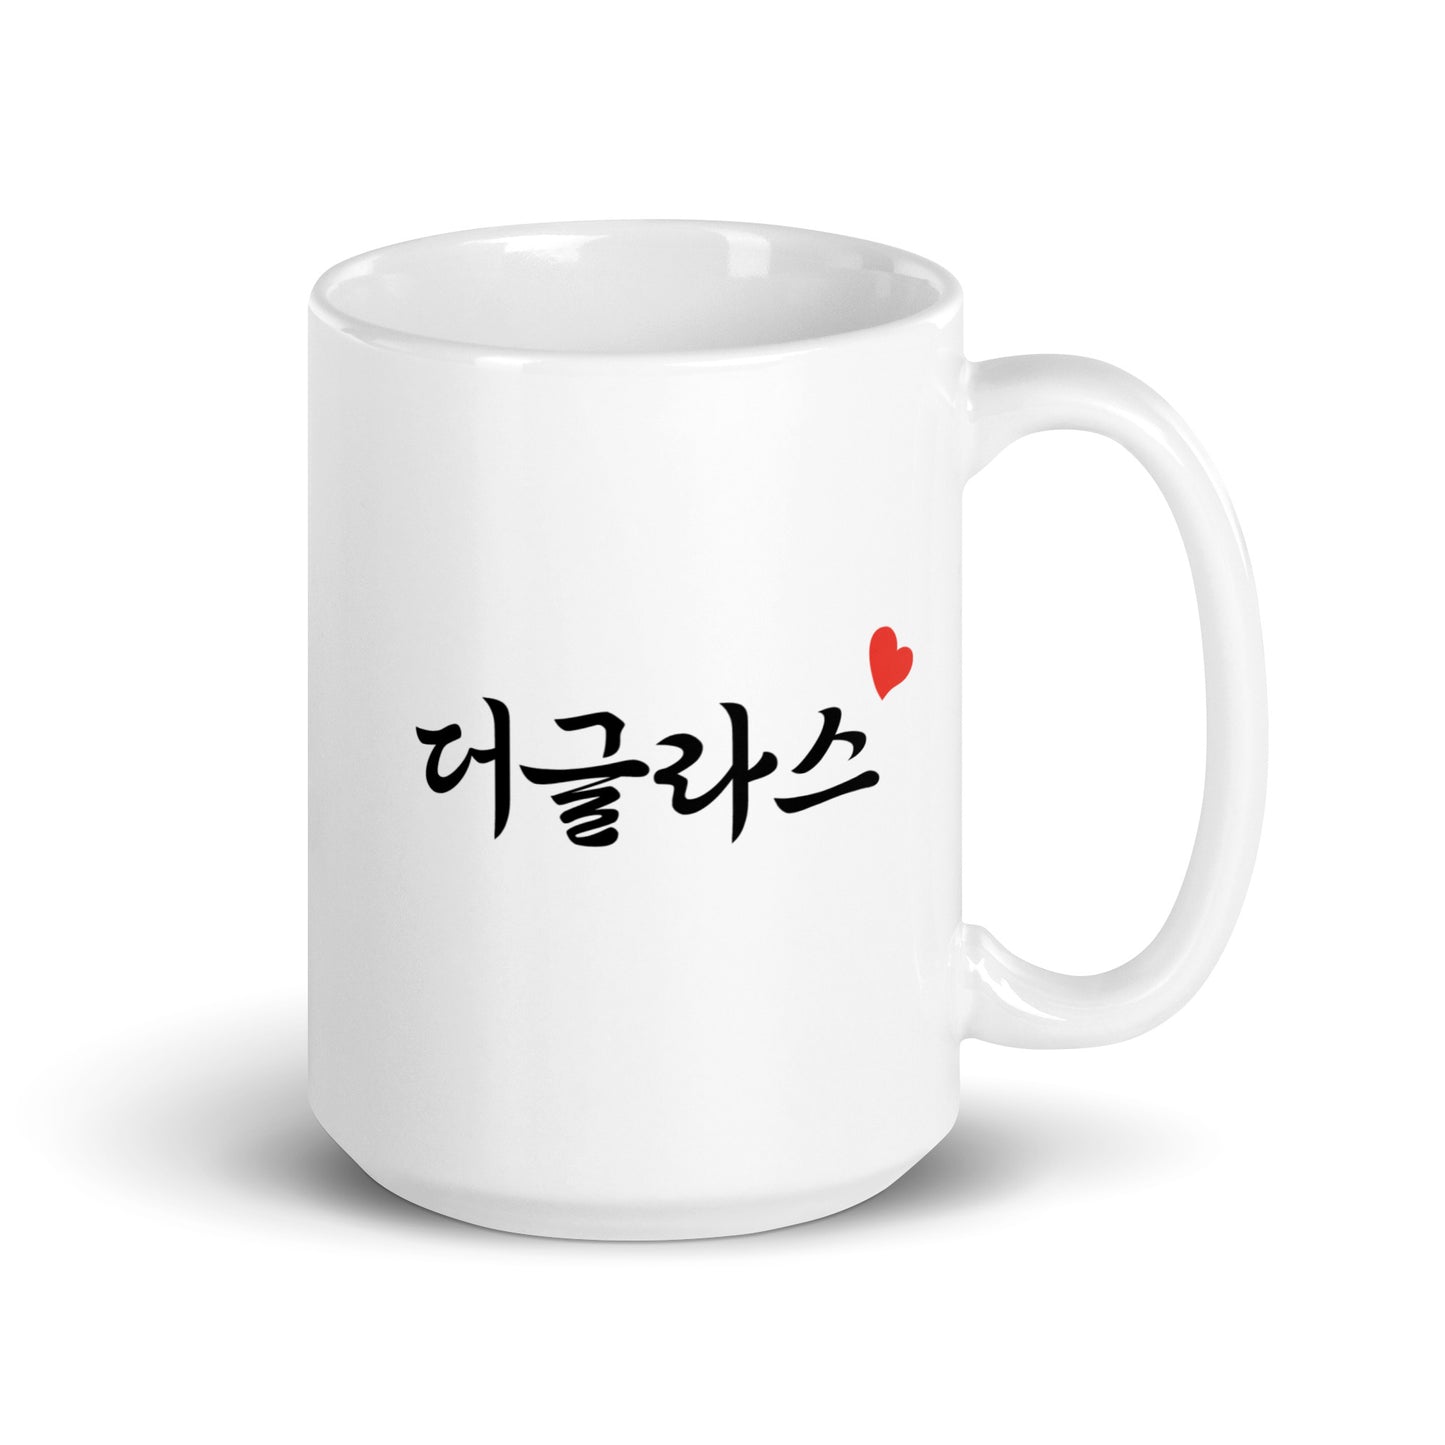 Douglas in Hangul Custom Name Gift Ceramic Mug